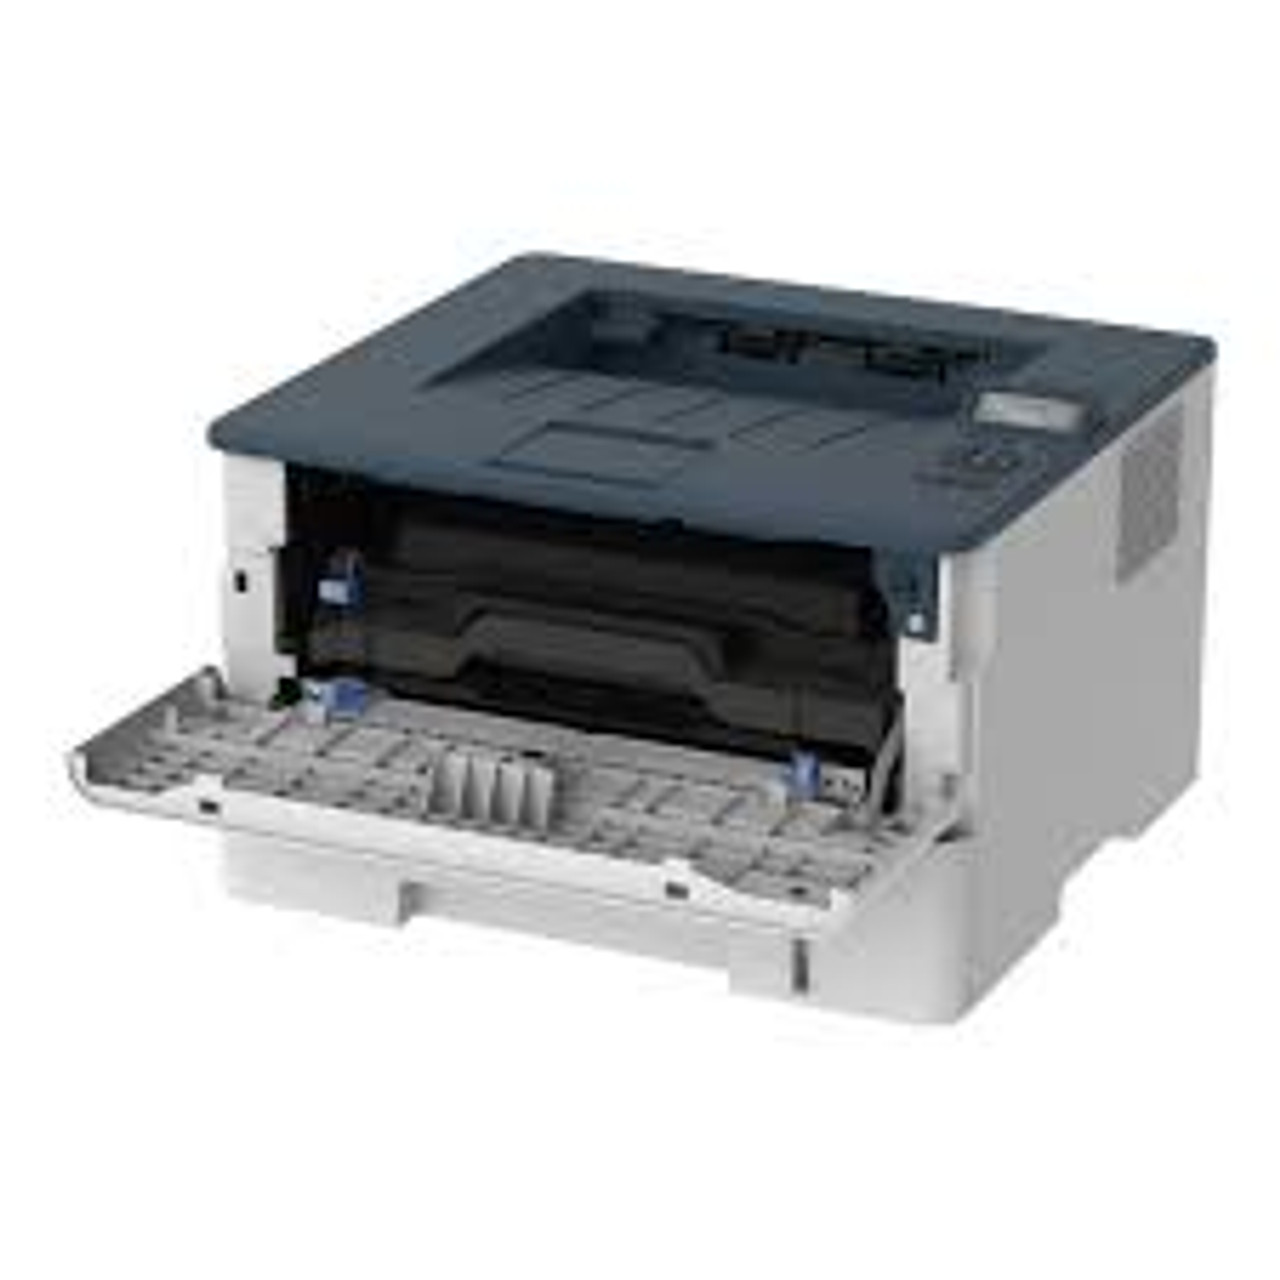 Xerox Printer VersaLink Up to 36ppm 250 sheets duplex network wifi  B230/DNI